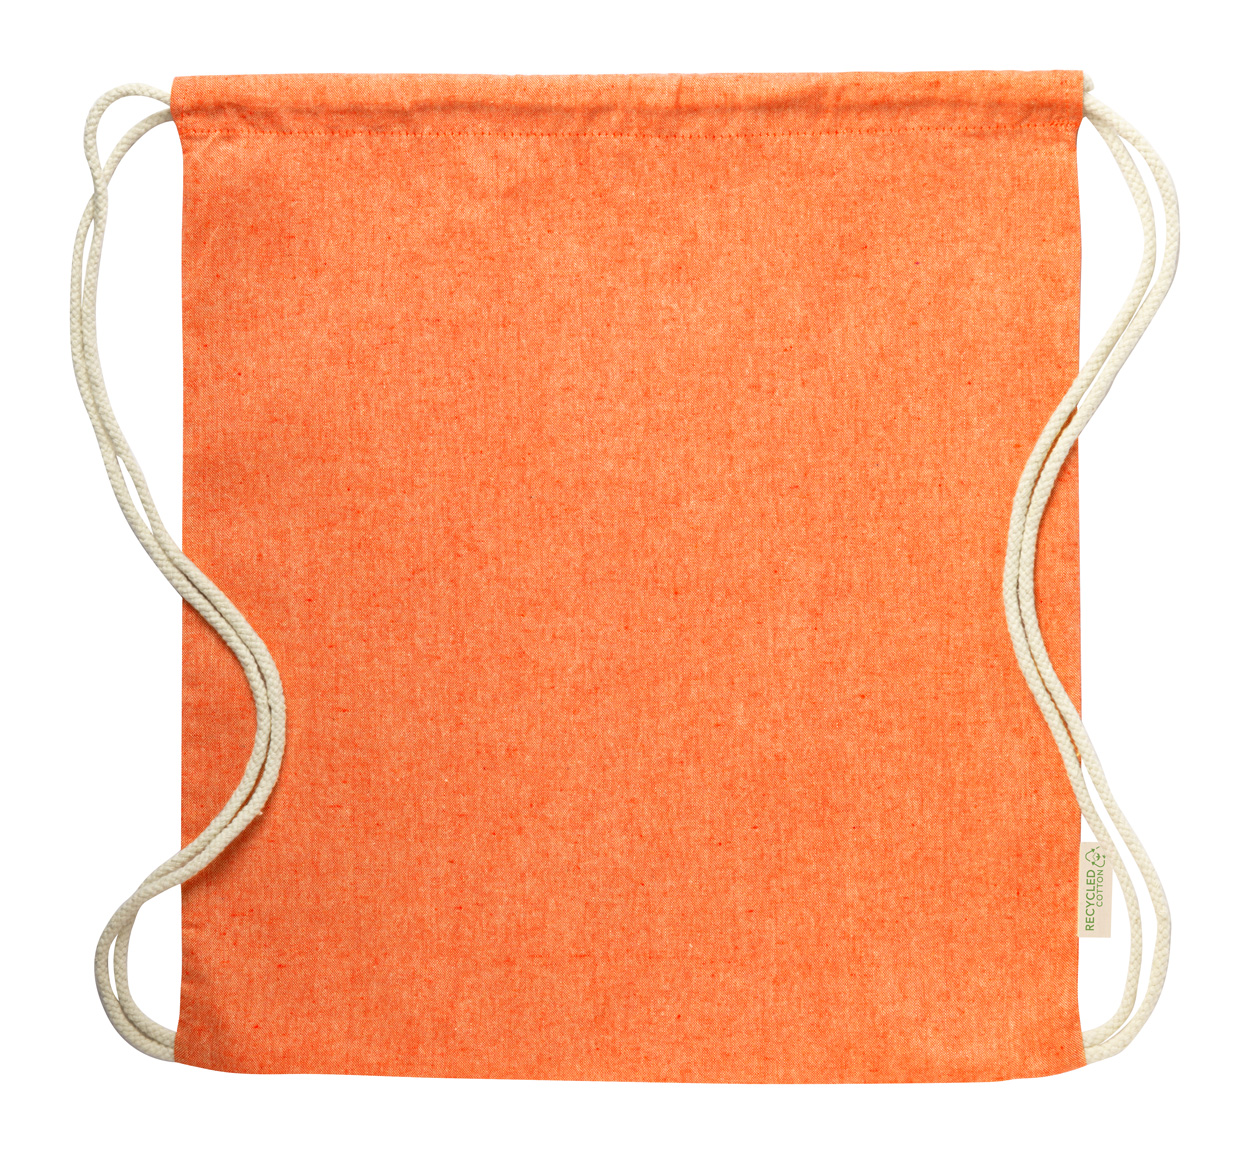 Konim drawstring bag - orange